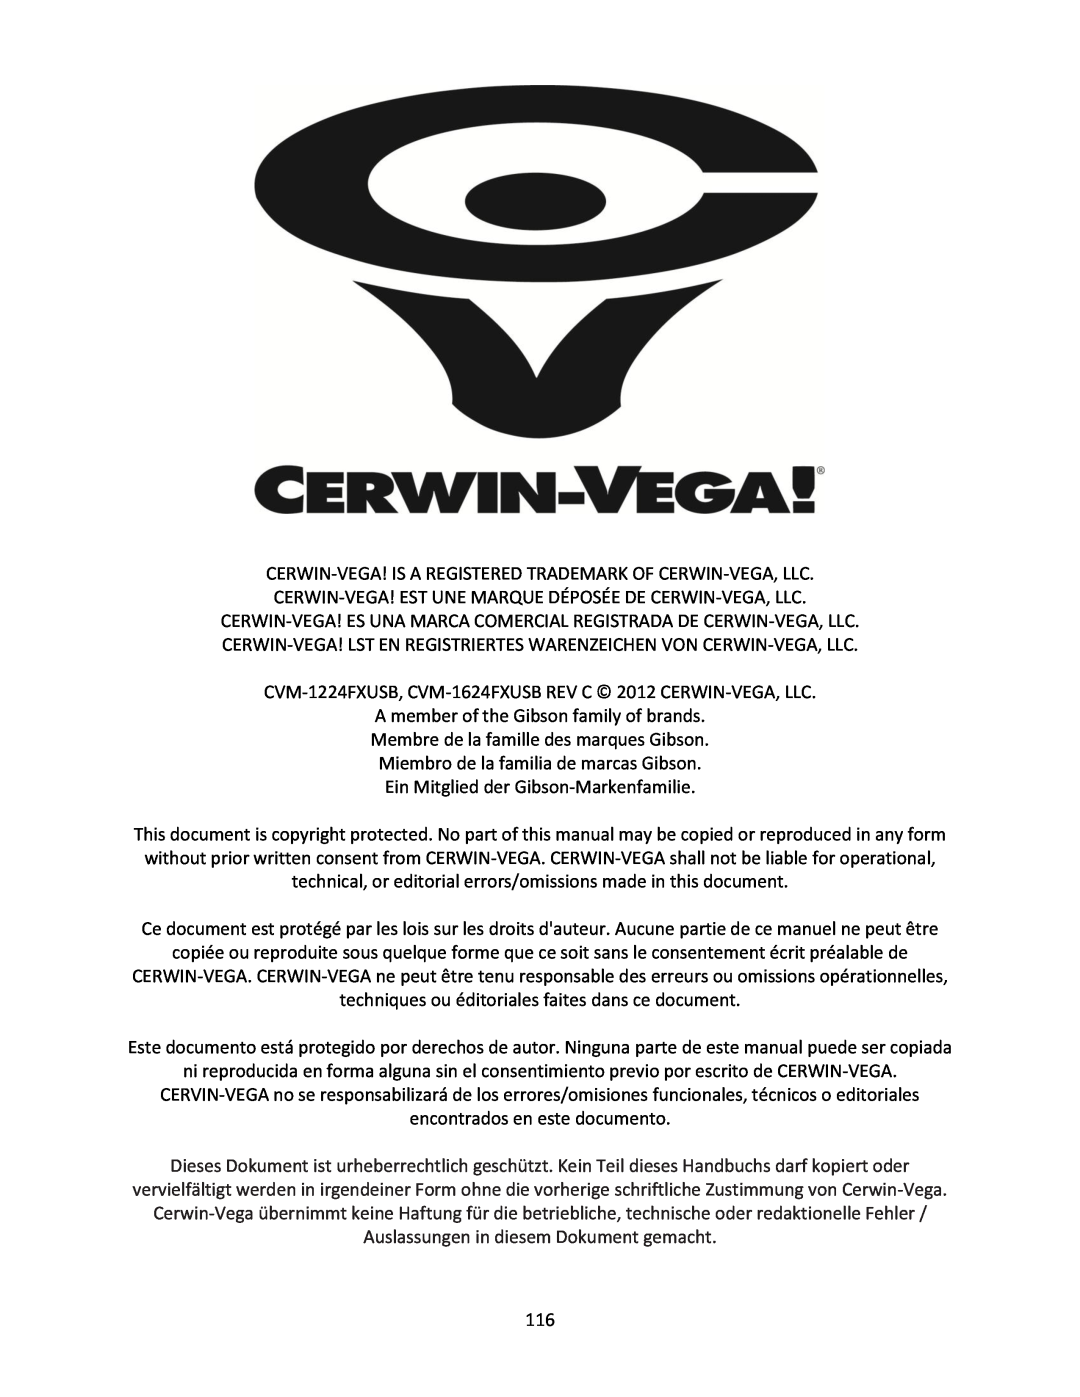 Cerwin-Vega manual CVM-1224FXUSB, CVM-1624FXUSB REV C 2012 CERWIN-VEGA, LLC 